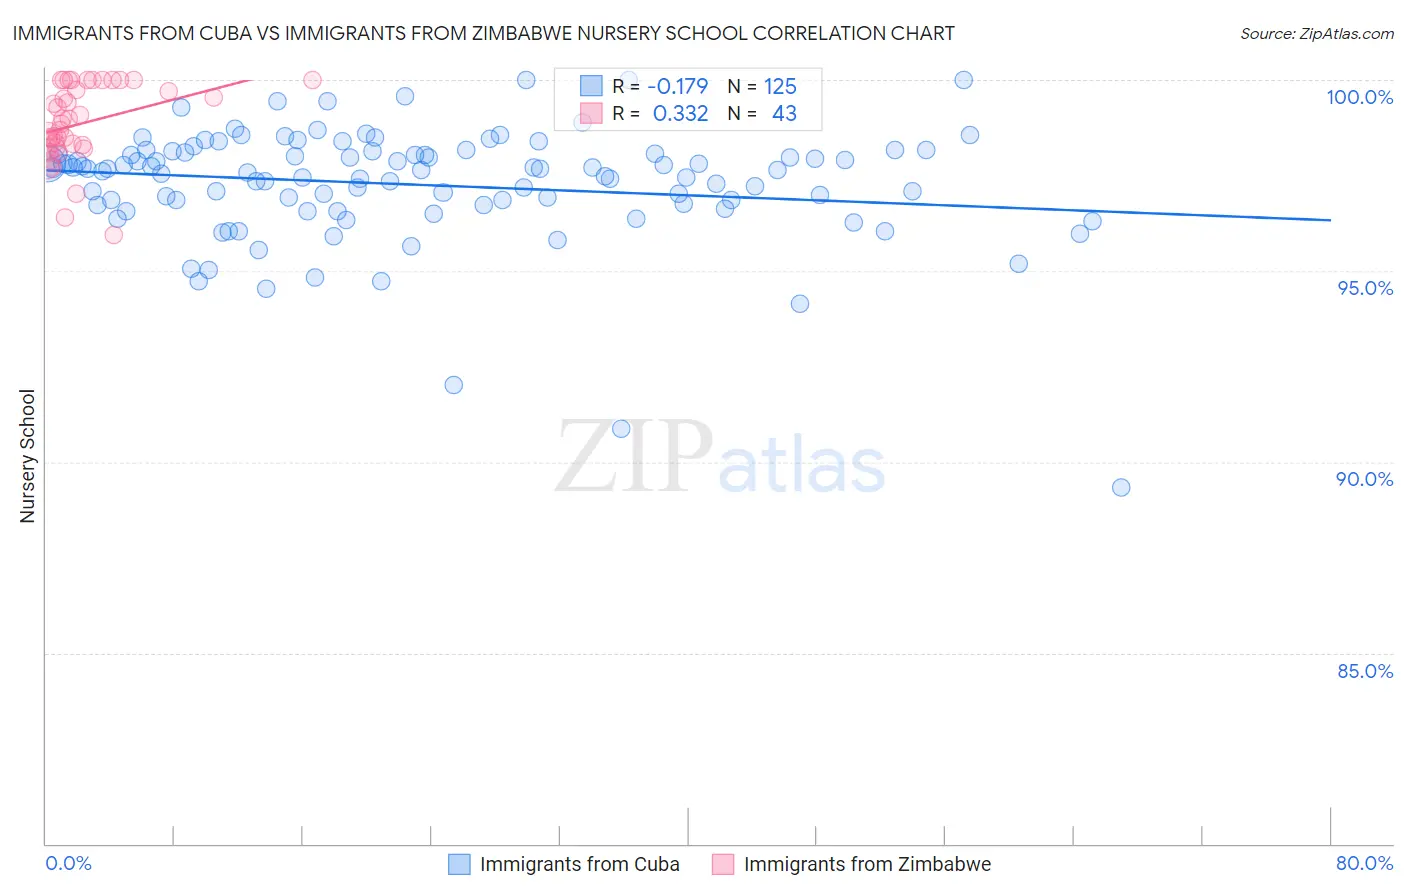 Immigrants from Cuba vs Immigrants from Zimbabwe Nursery School